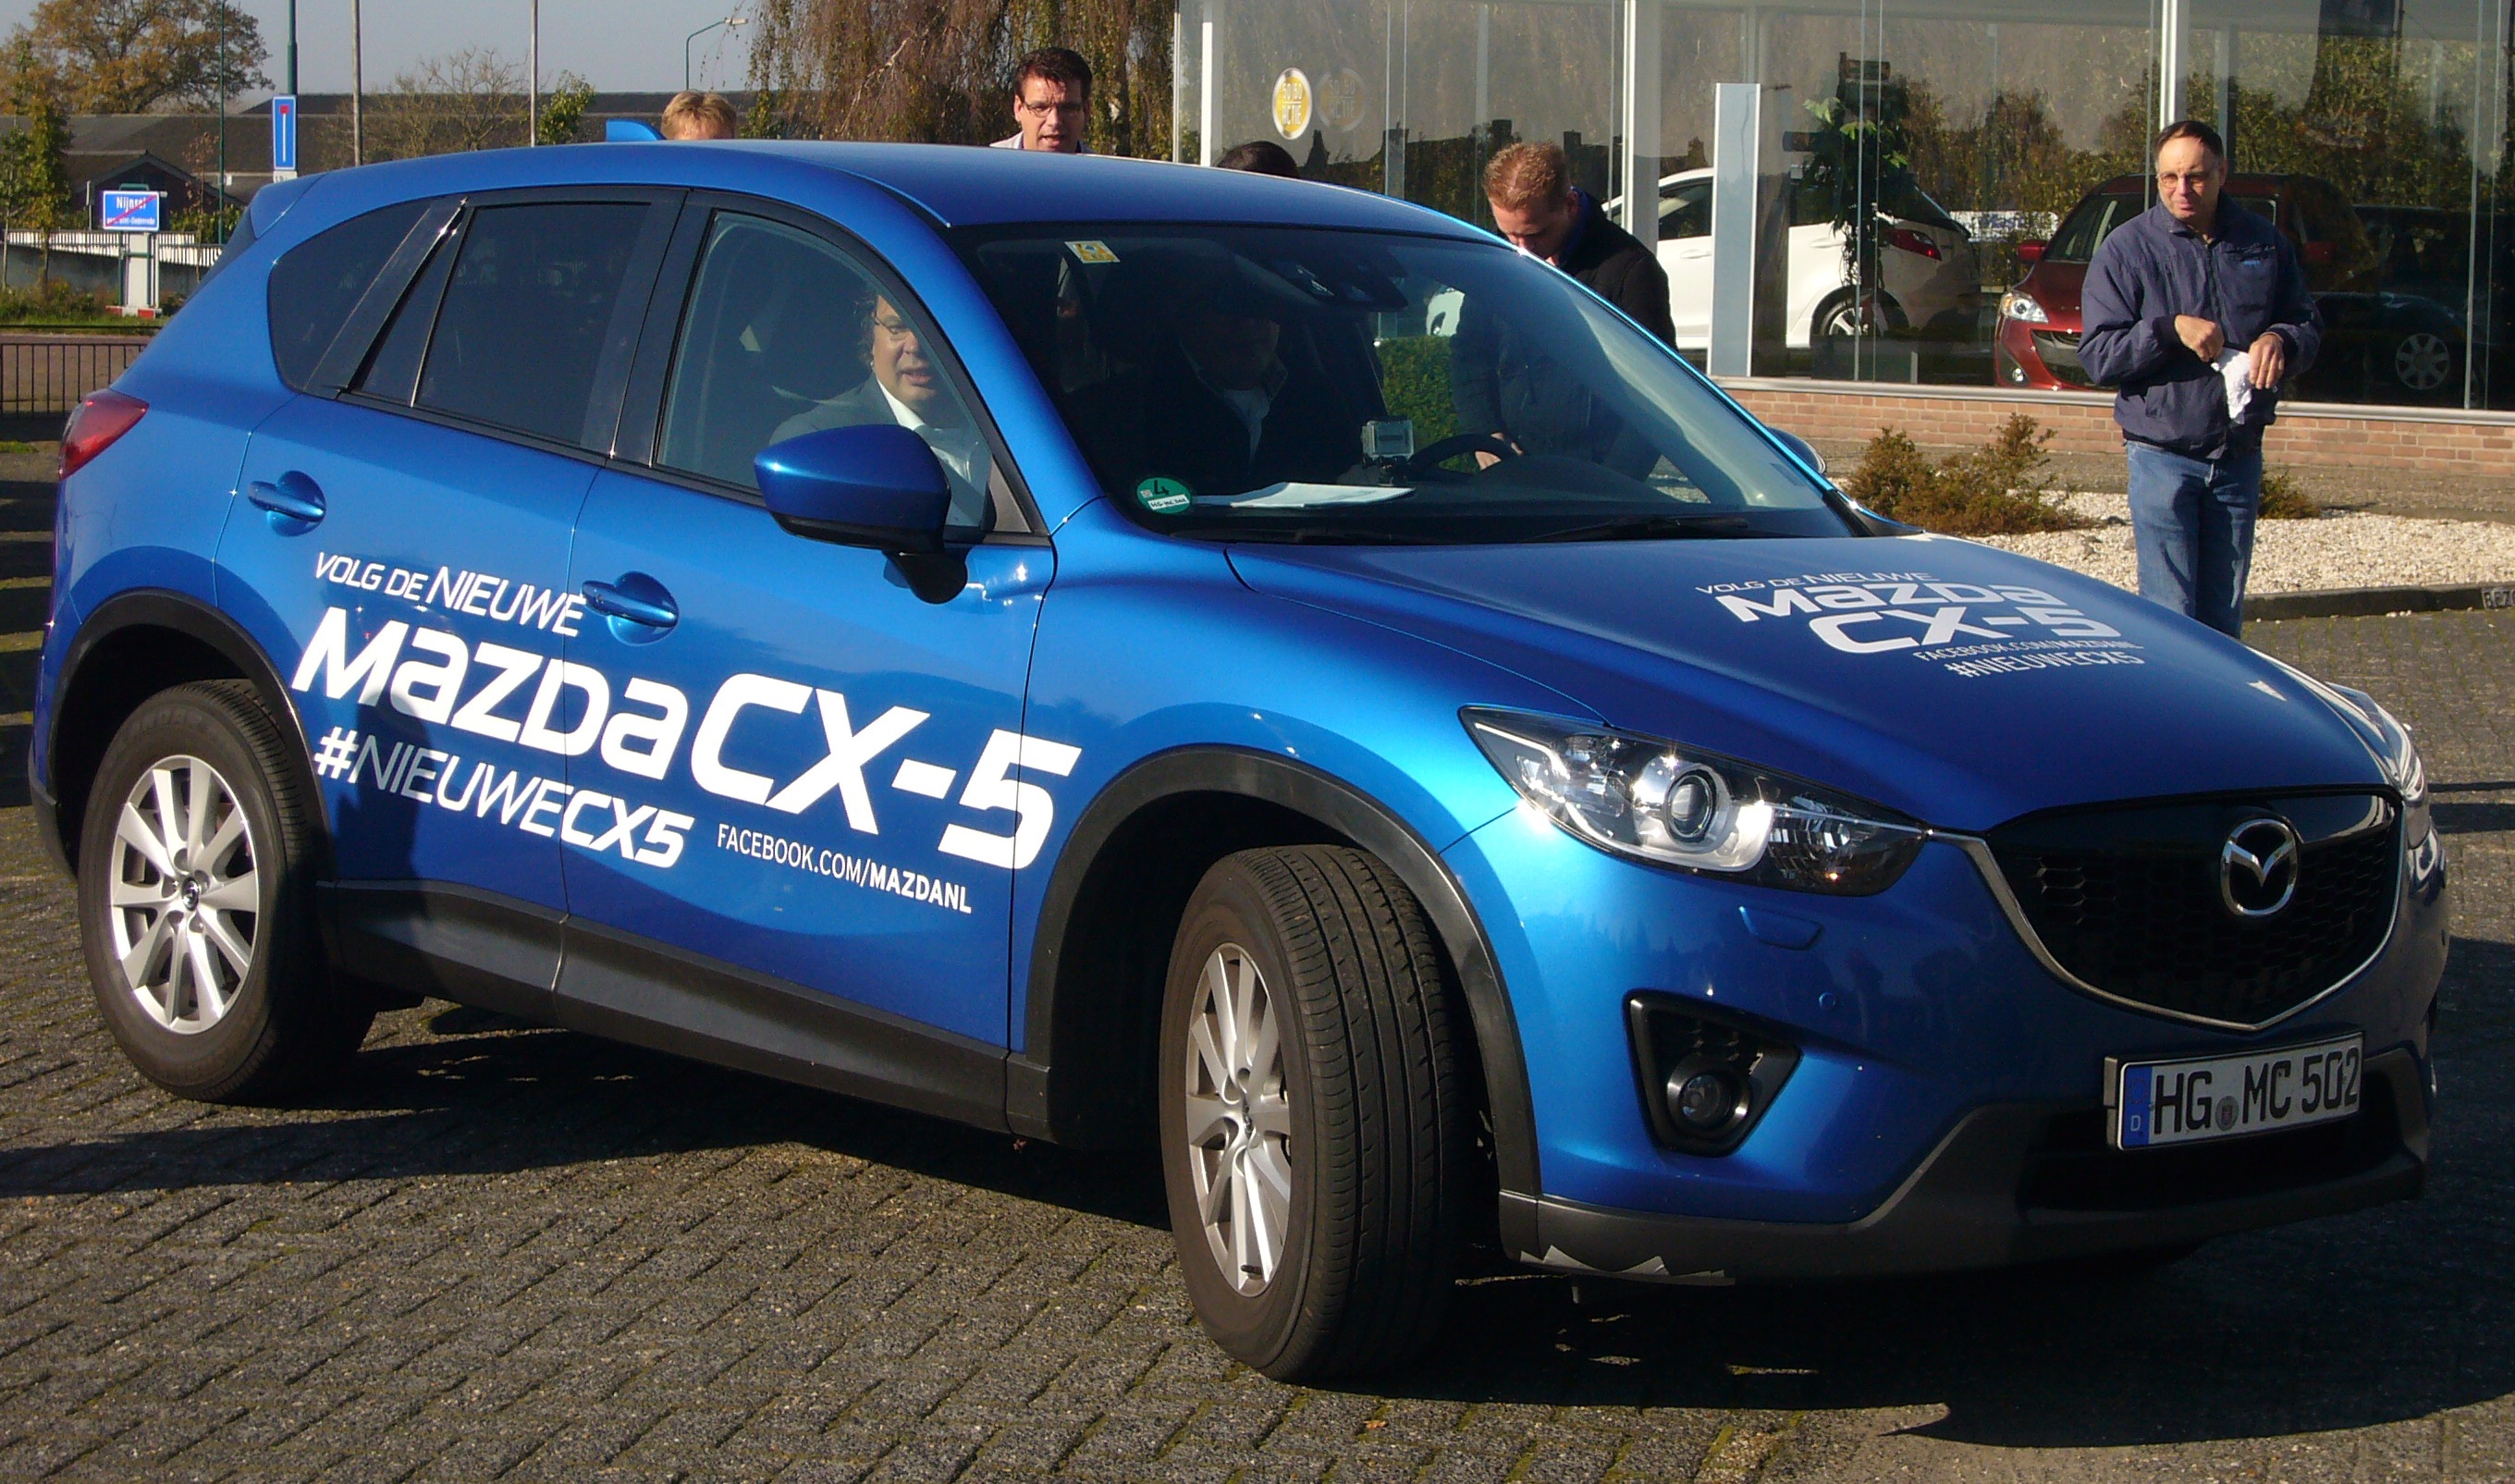 File:Mazda CX-5 (front quarter).jpg - Wikipedia